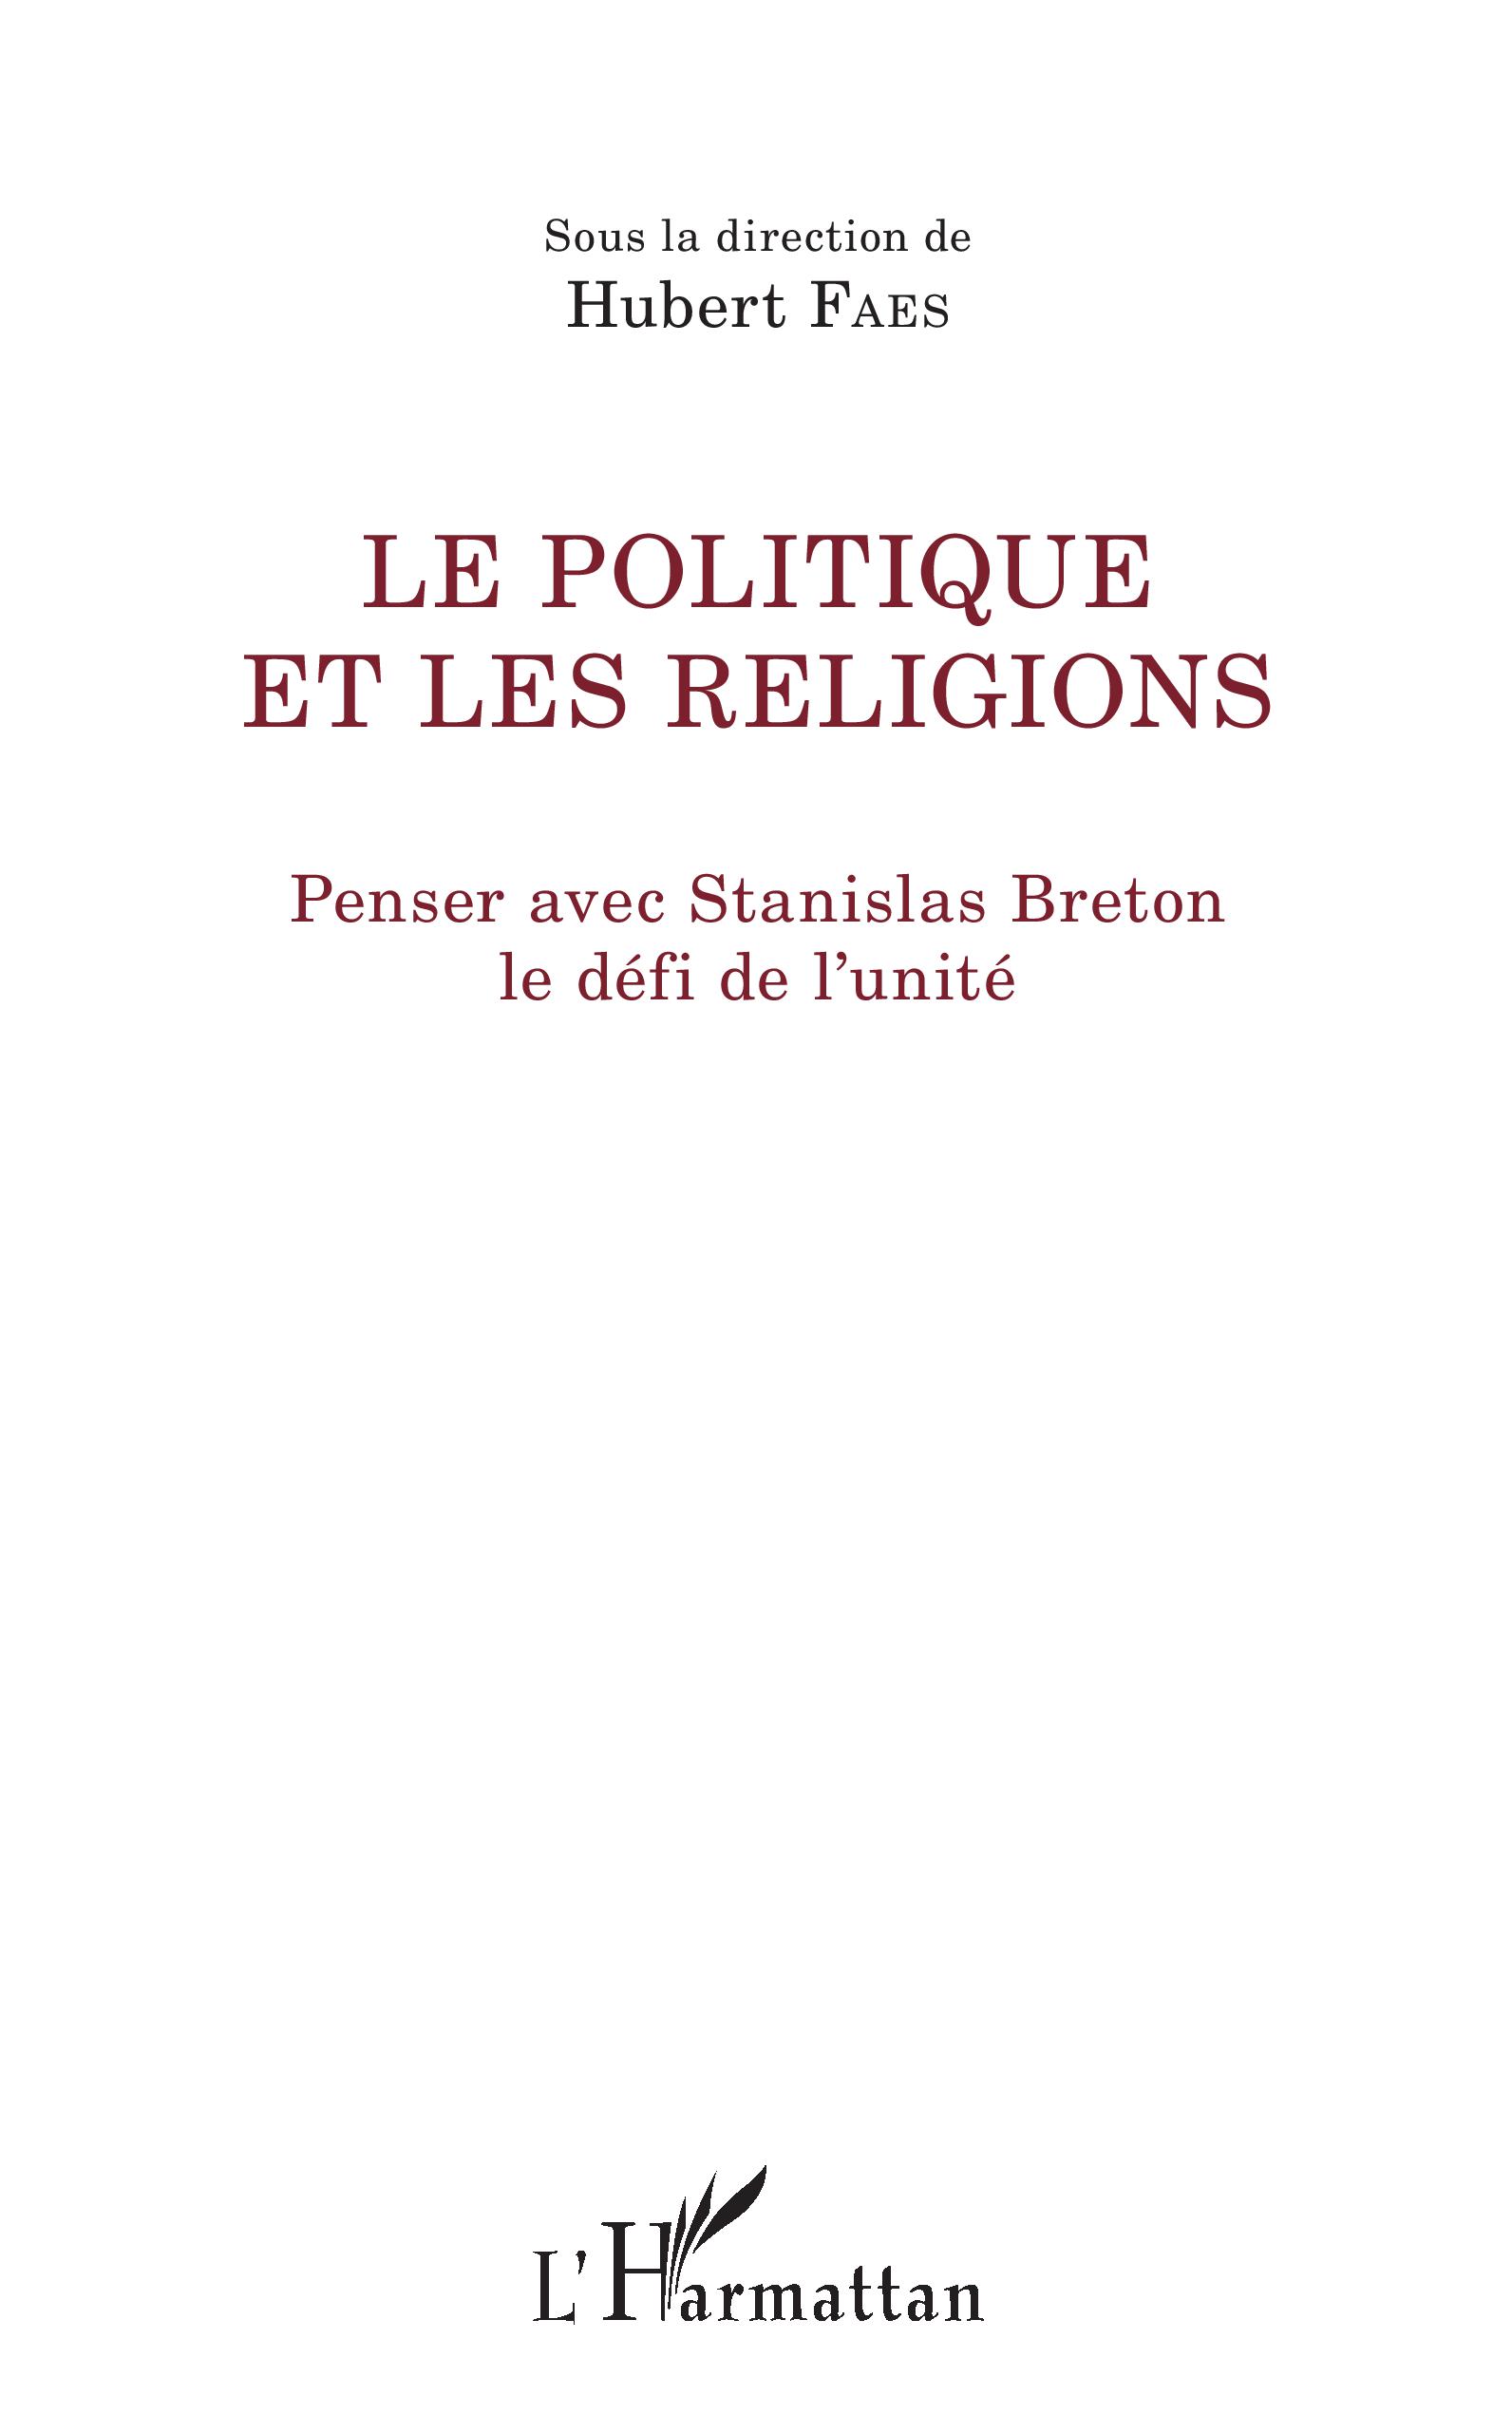 201901 80 Livres 03 PolitiqueReligions